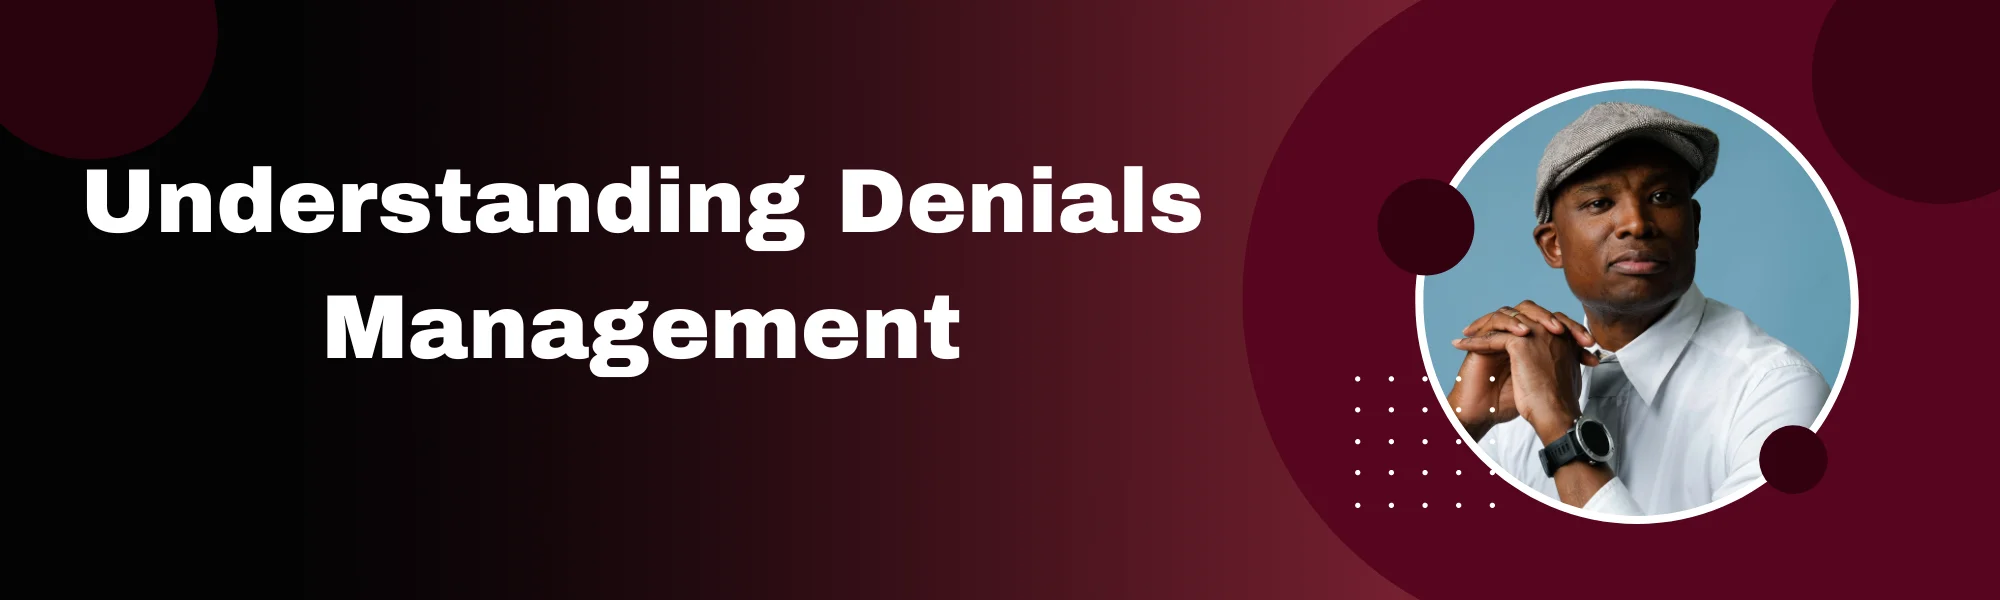 Understanding Denials Management